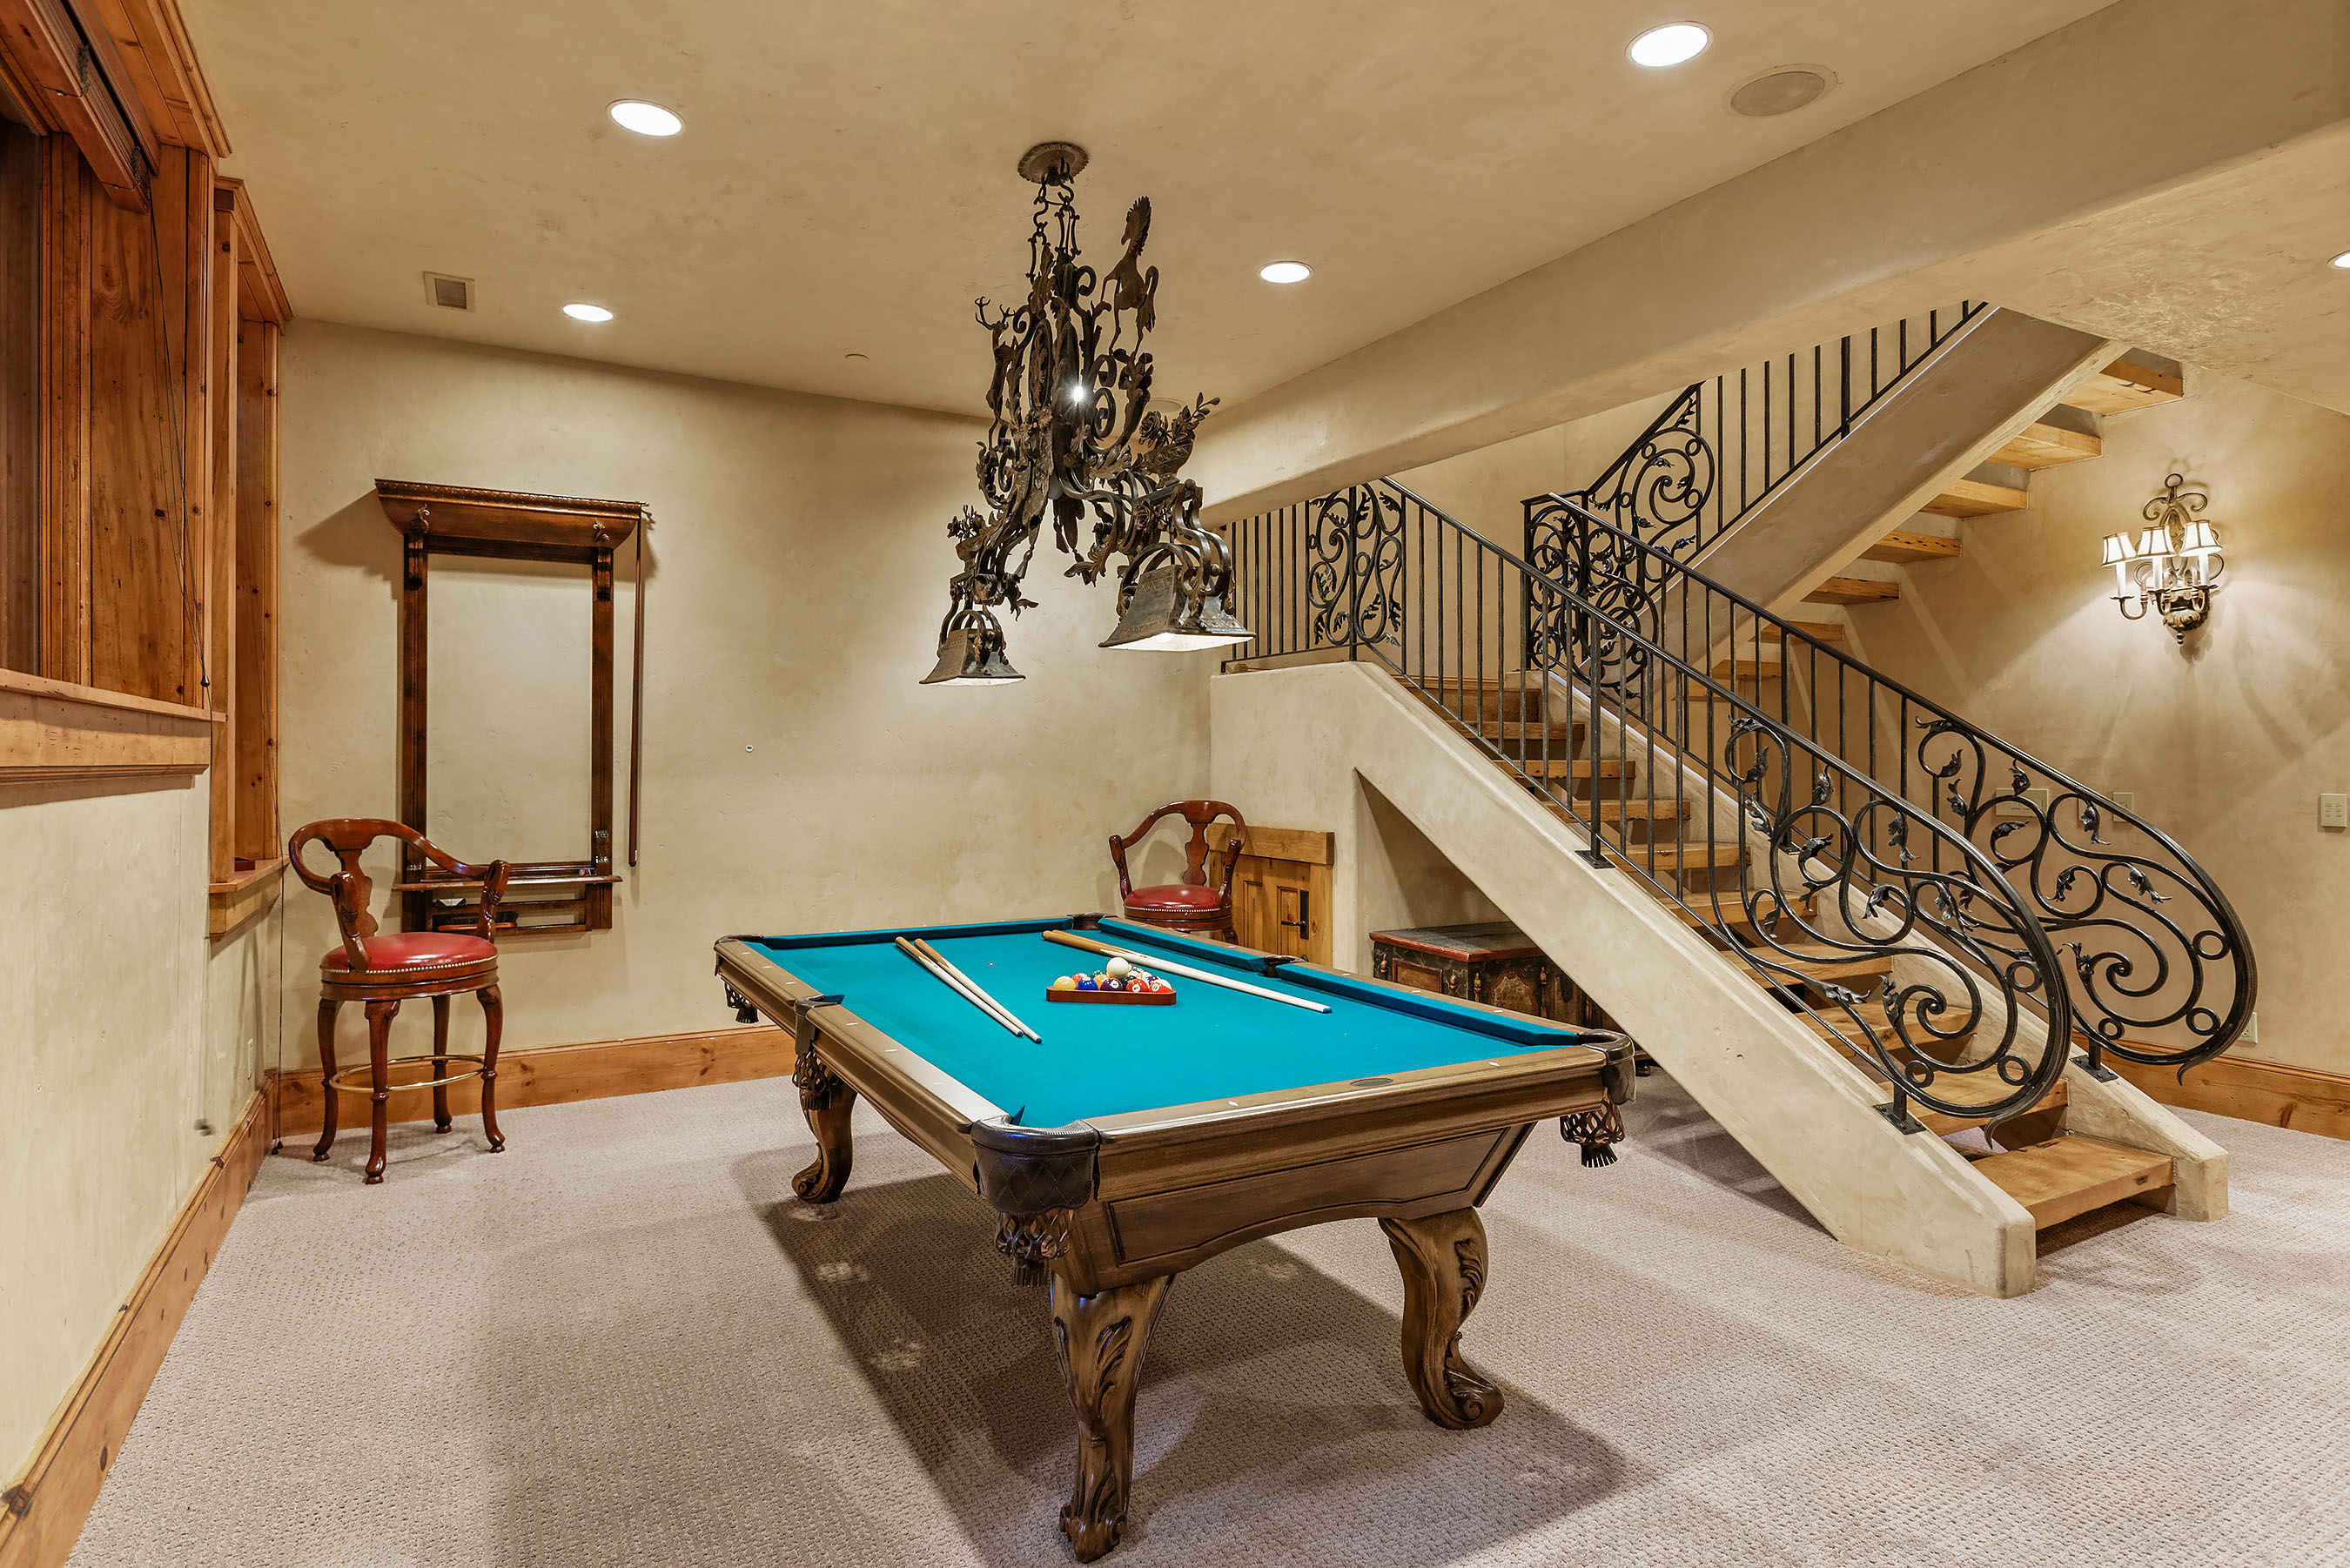 Billiards room, downstairs. 